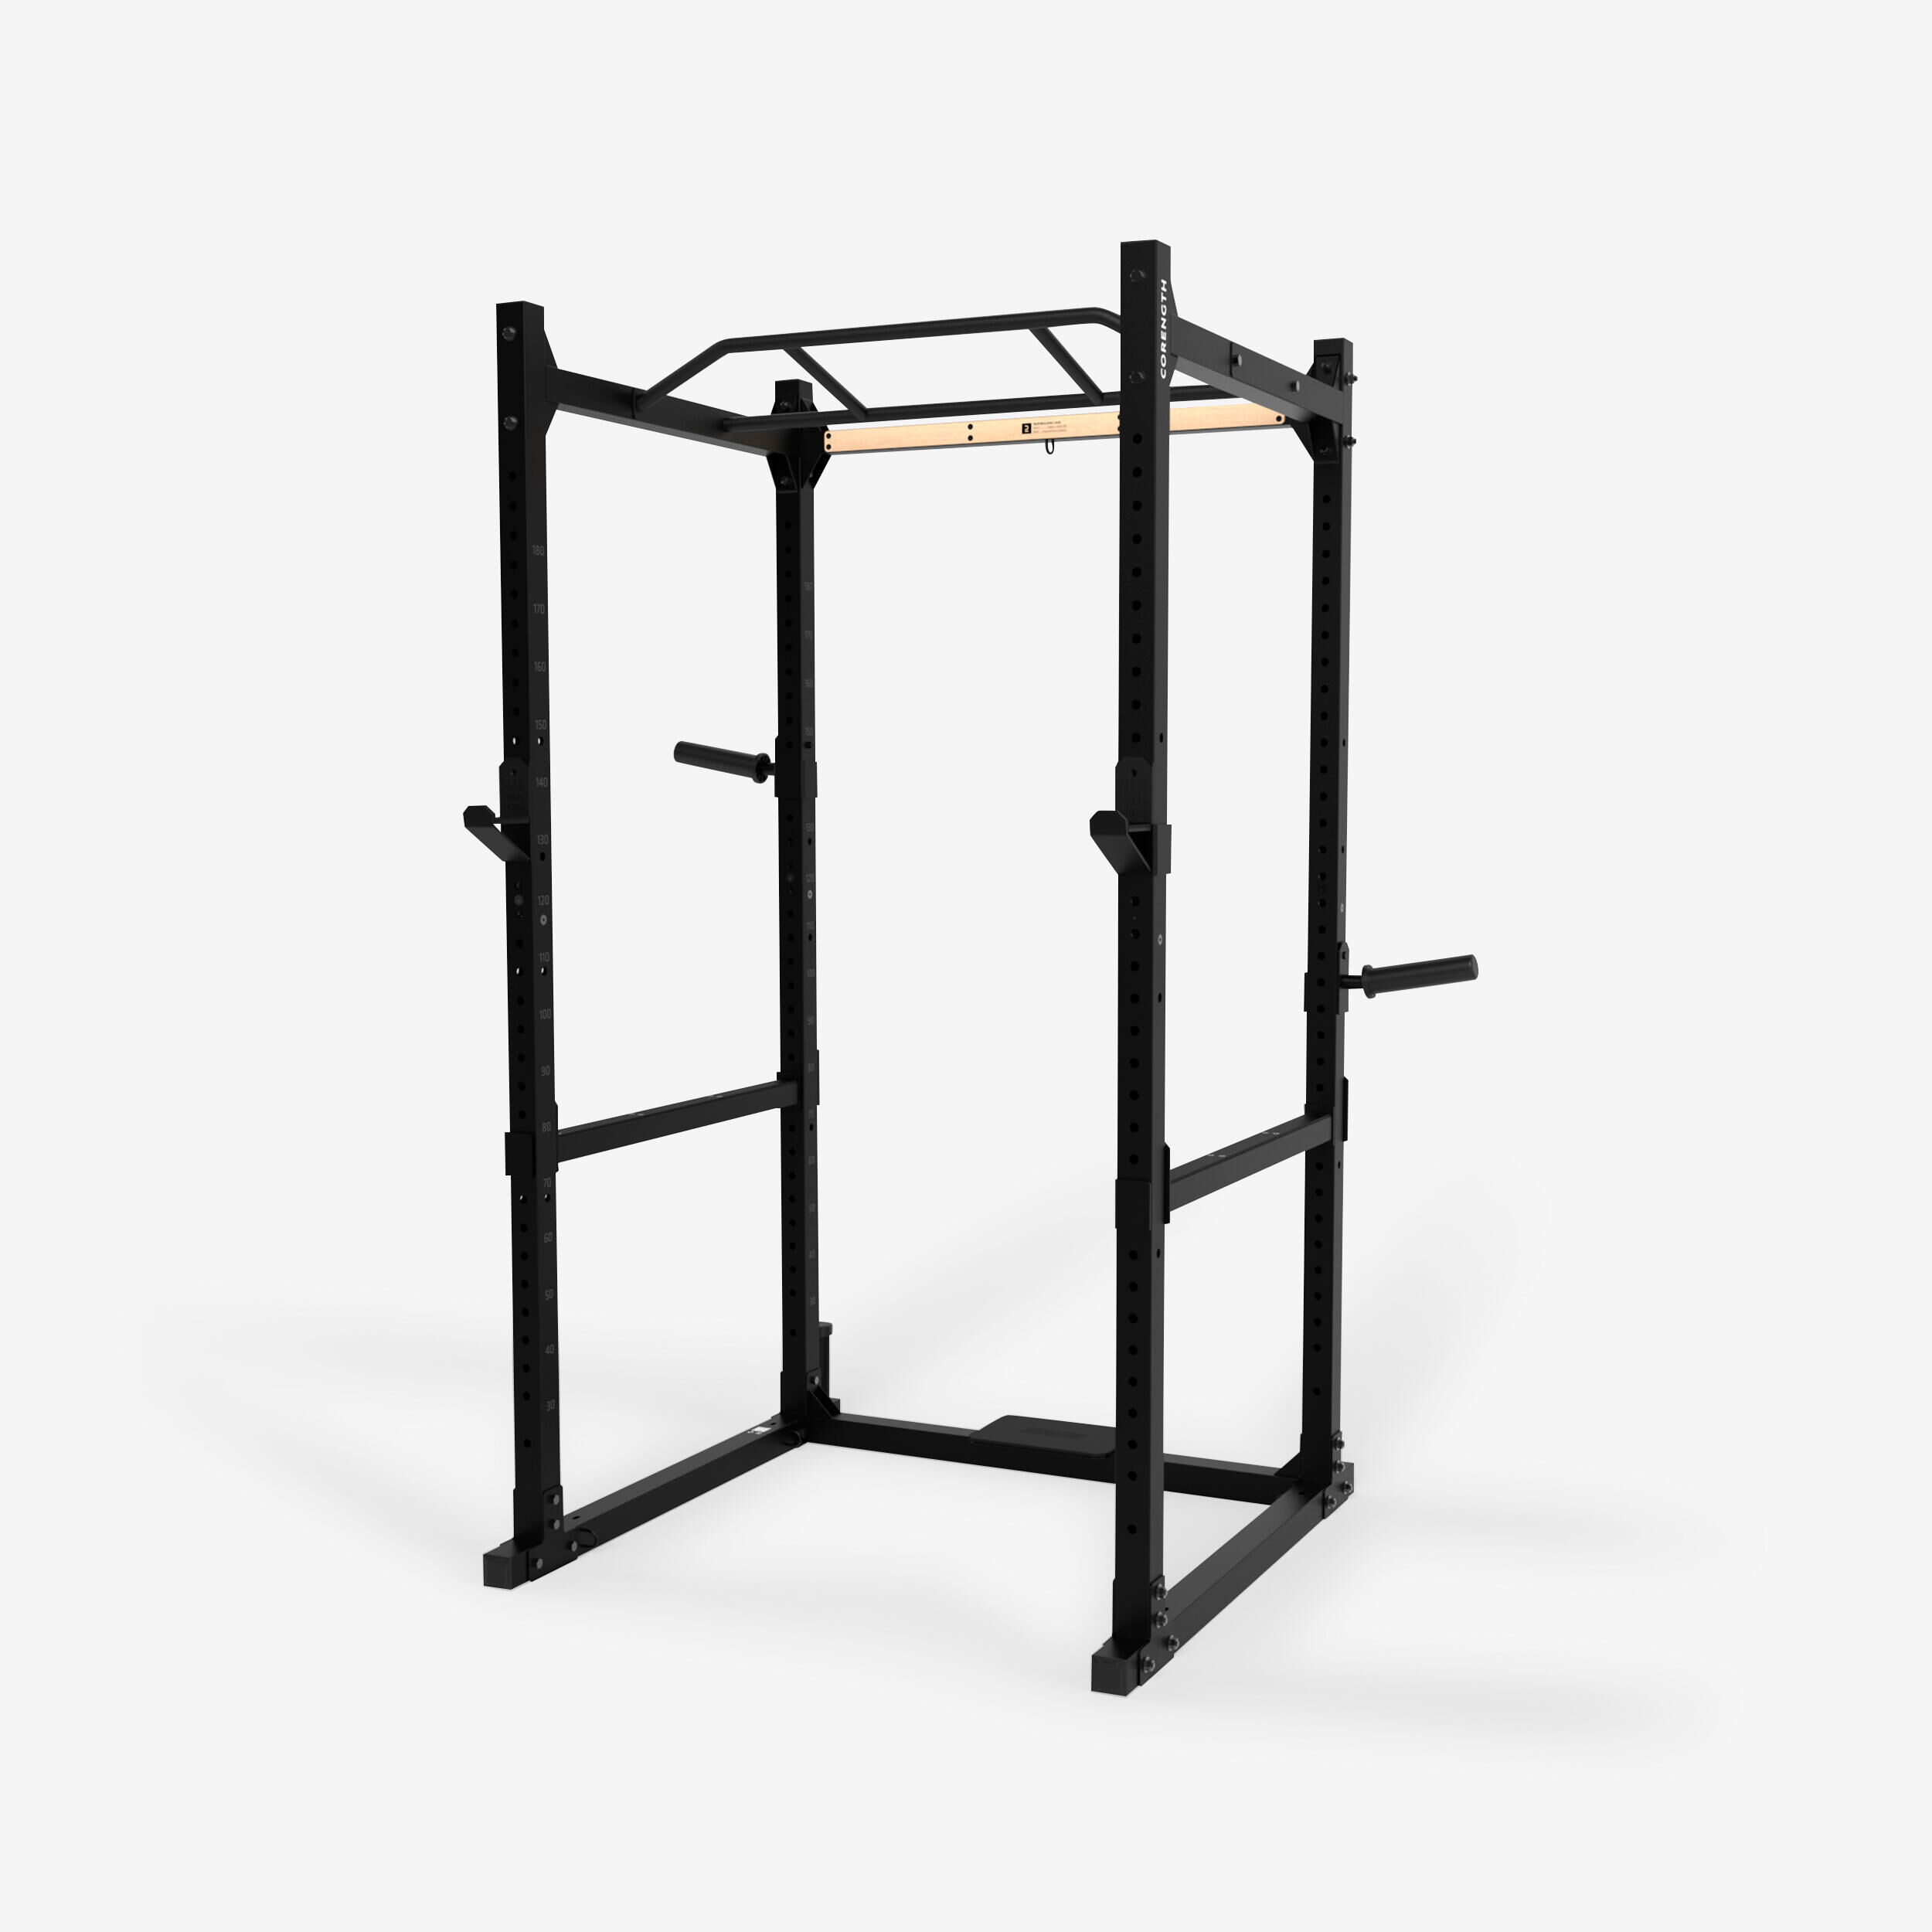 CORENGTH Weight Training Cage - Rack Body 900